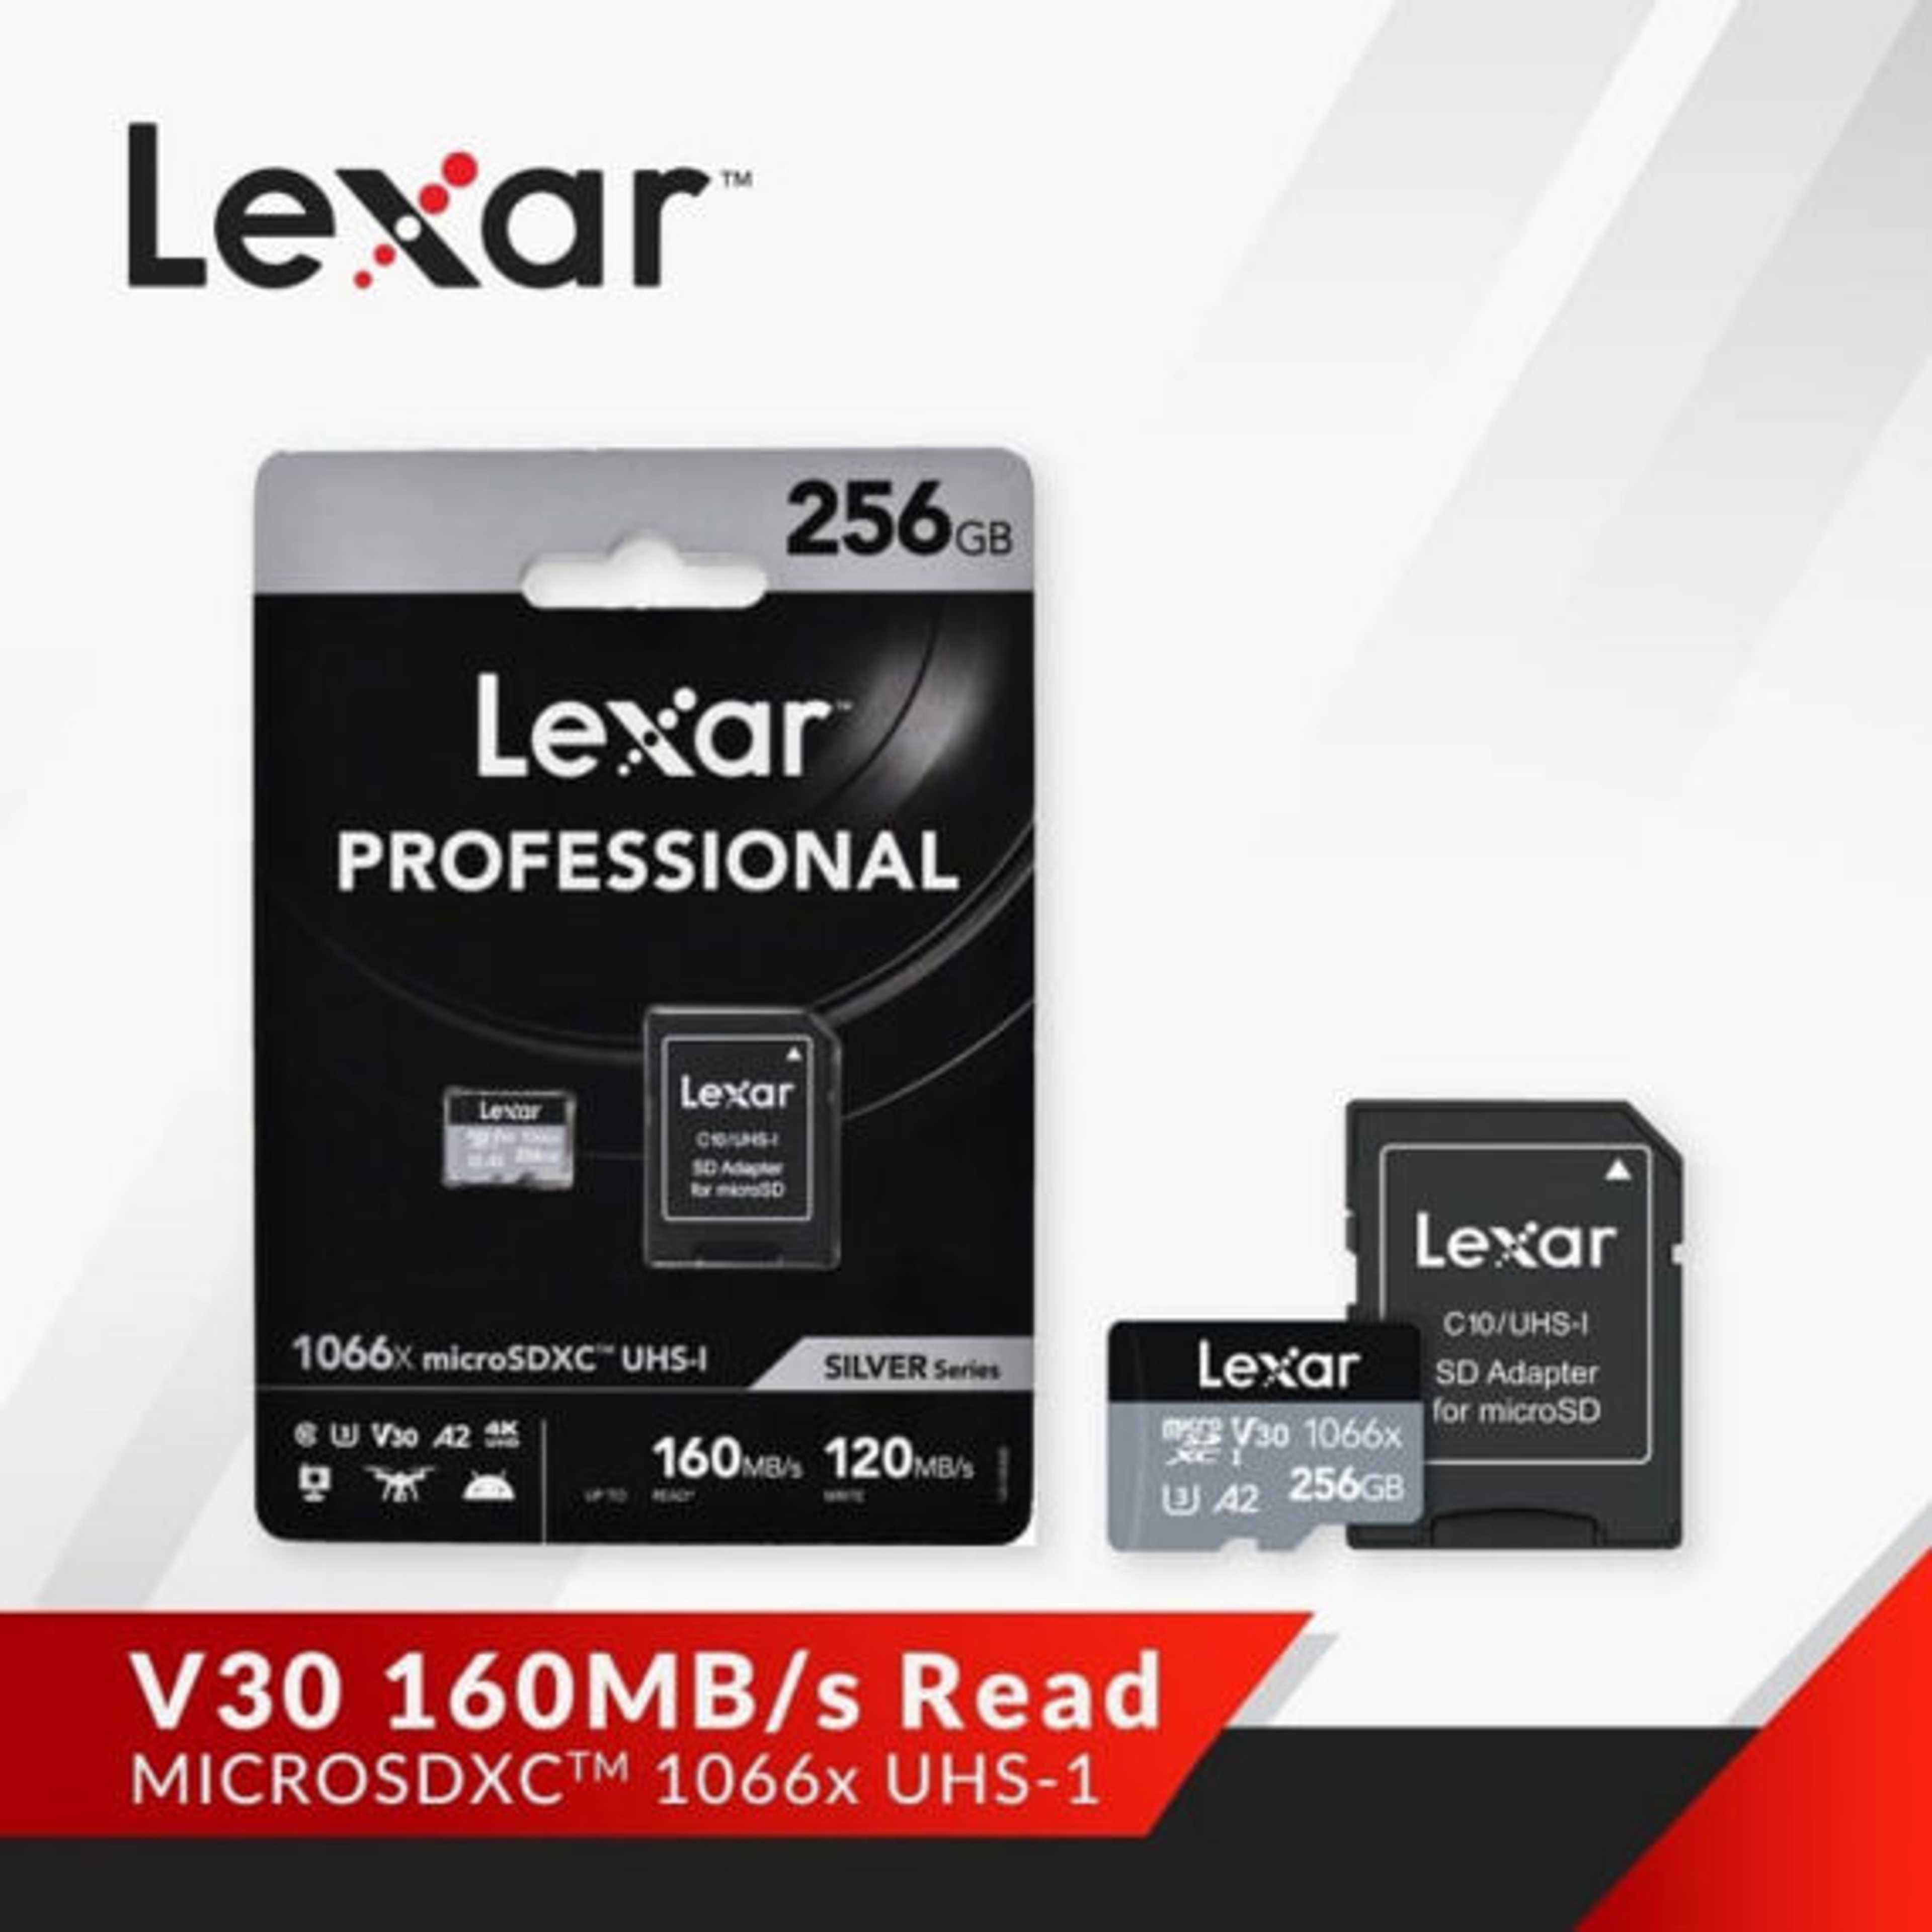 256GB Lexar Professional 1066x microSDXC UHS-I Card SILVER Series